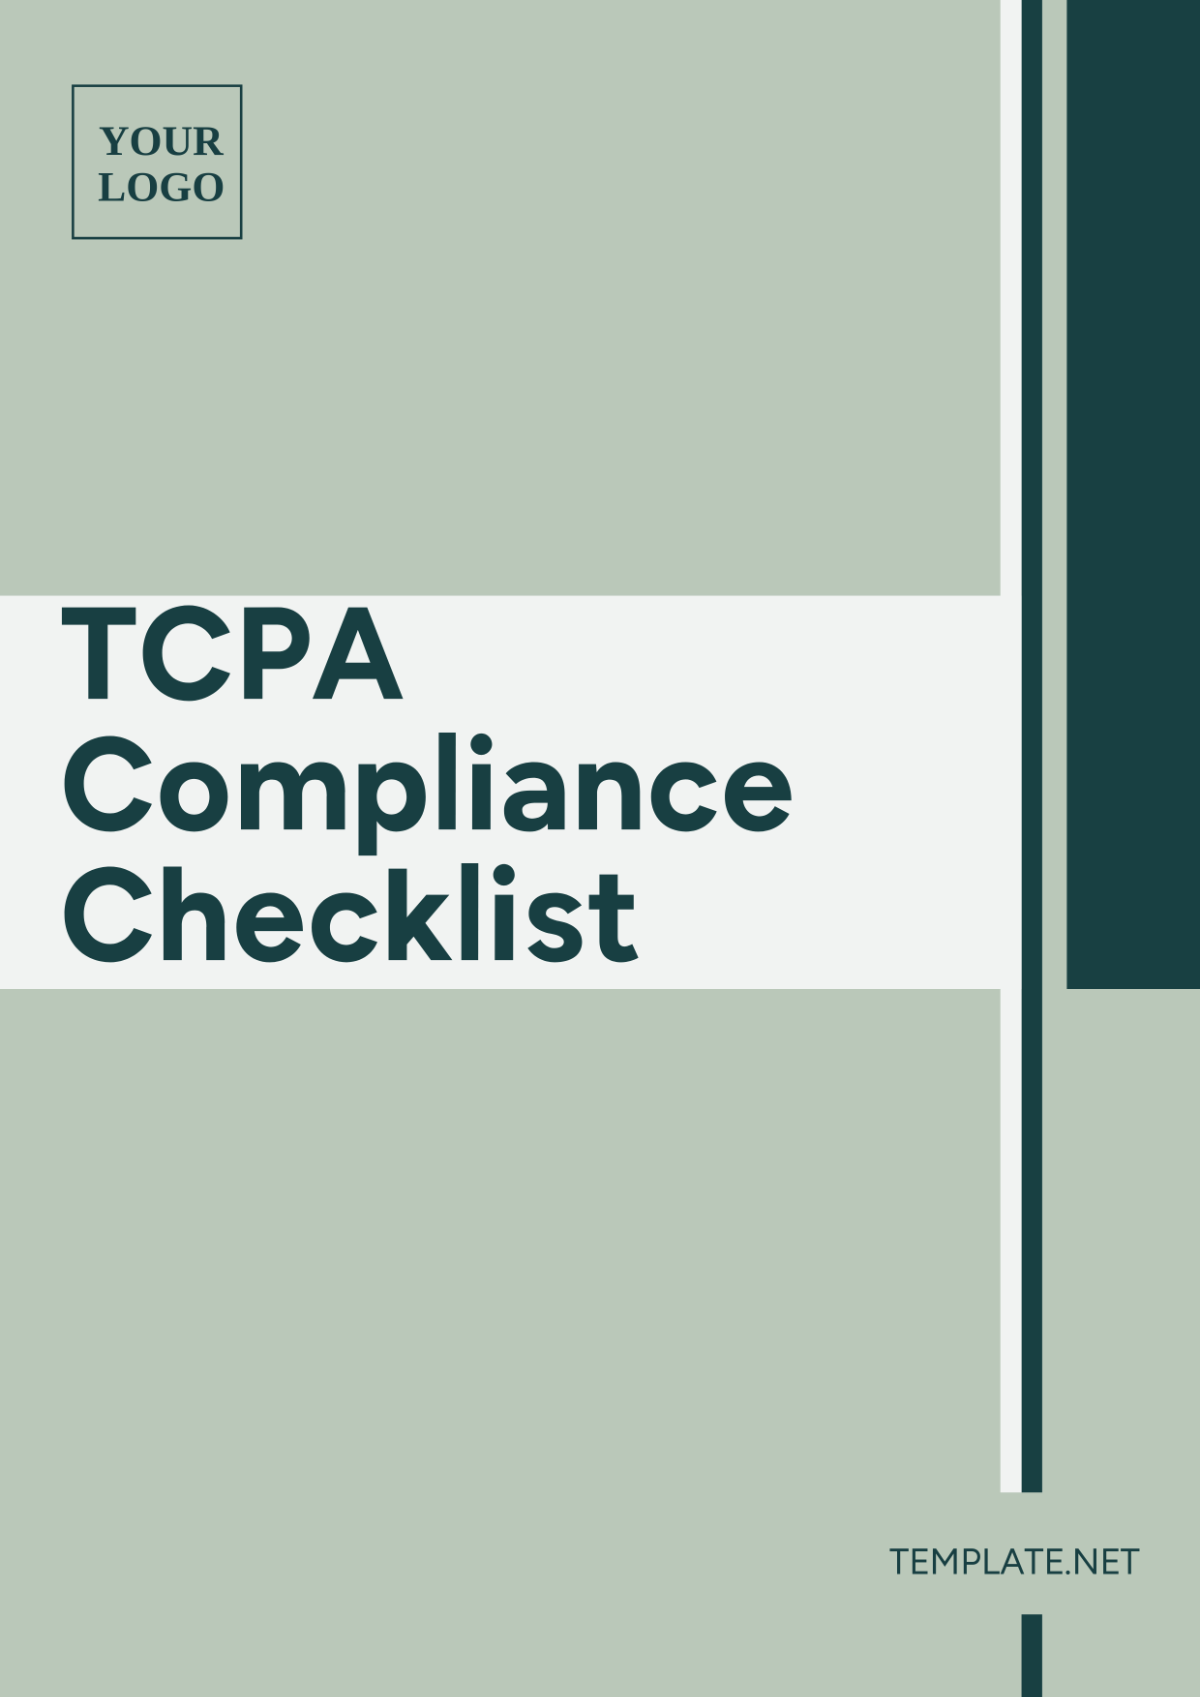 TCPA Compliance Checklist Template